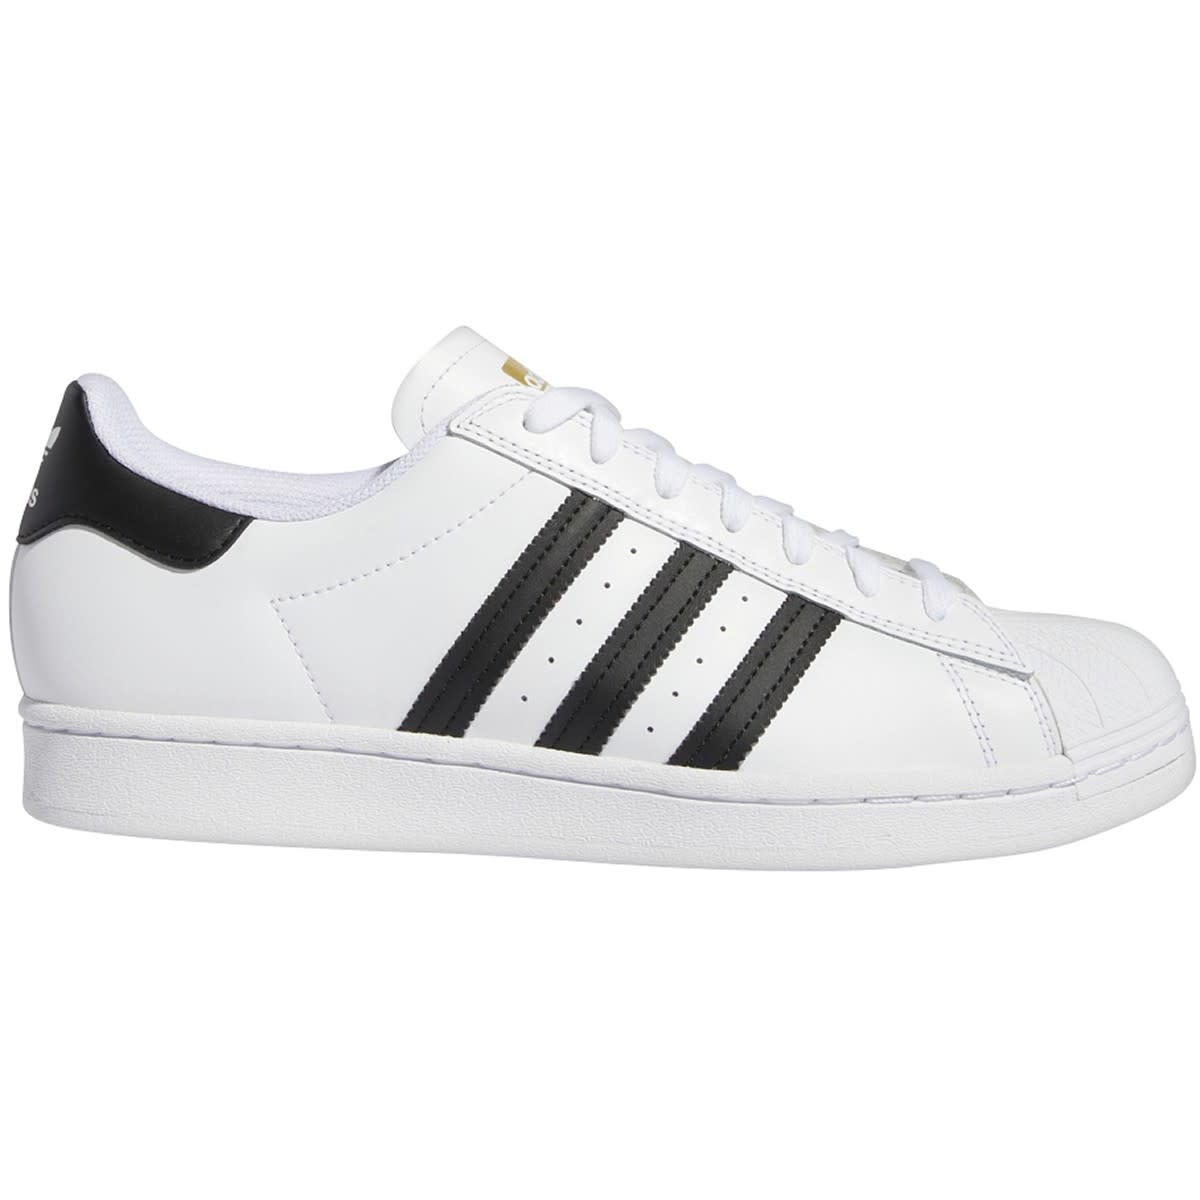 Adidas Superstar ADV White/Black